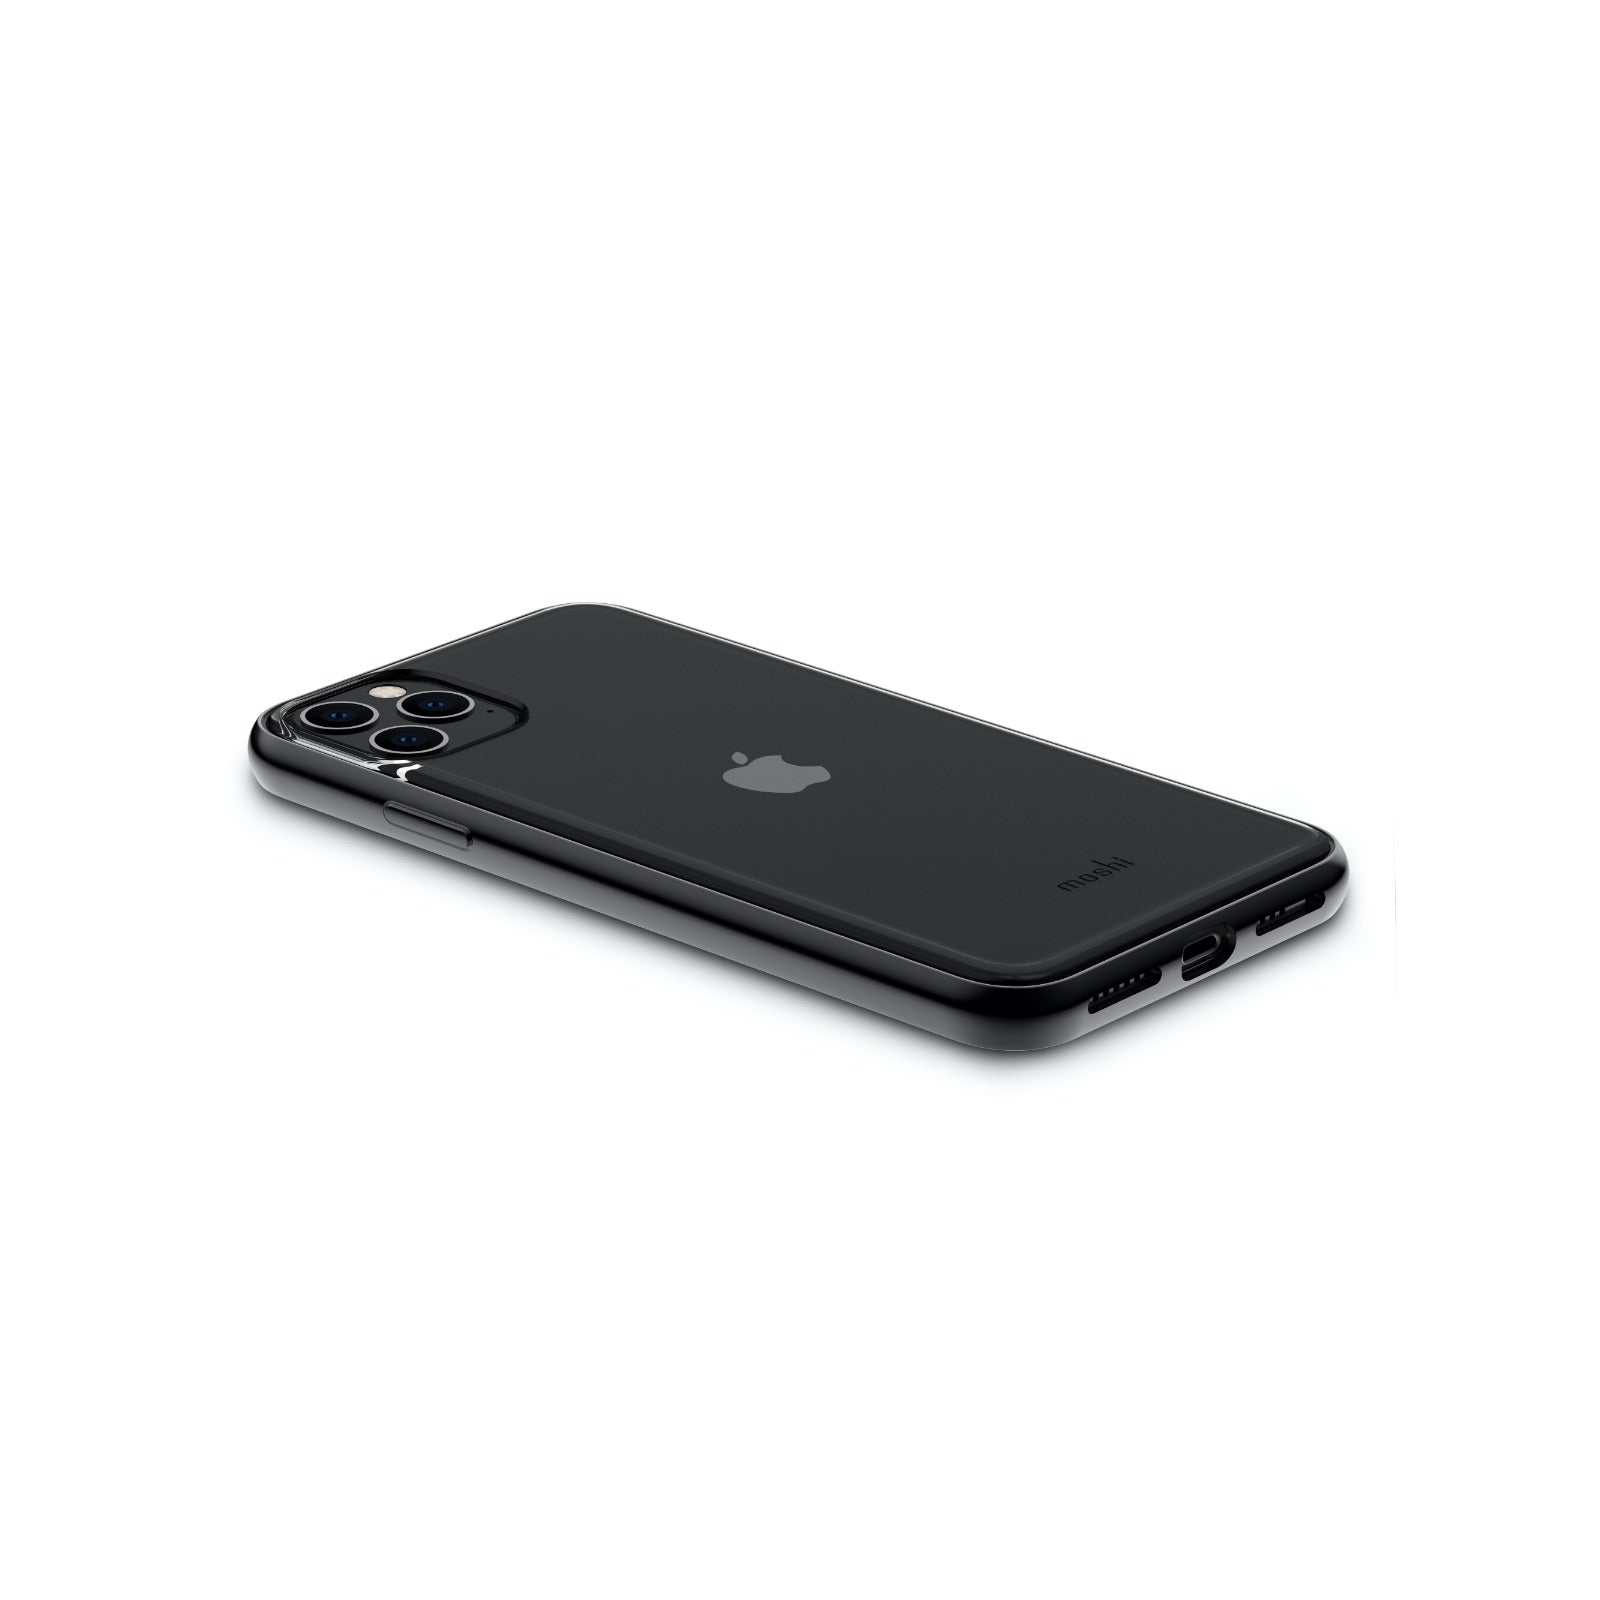 Moshi Vitros Slim Clear Case for iPhone 11